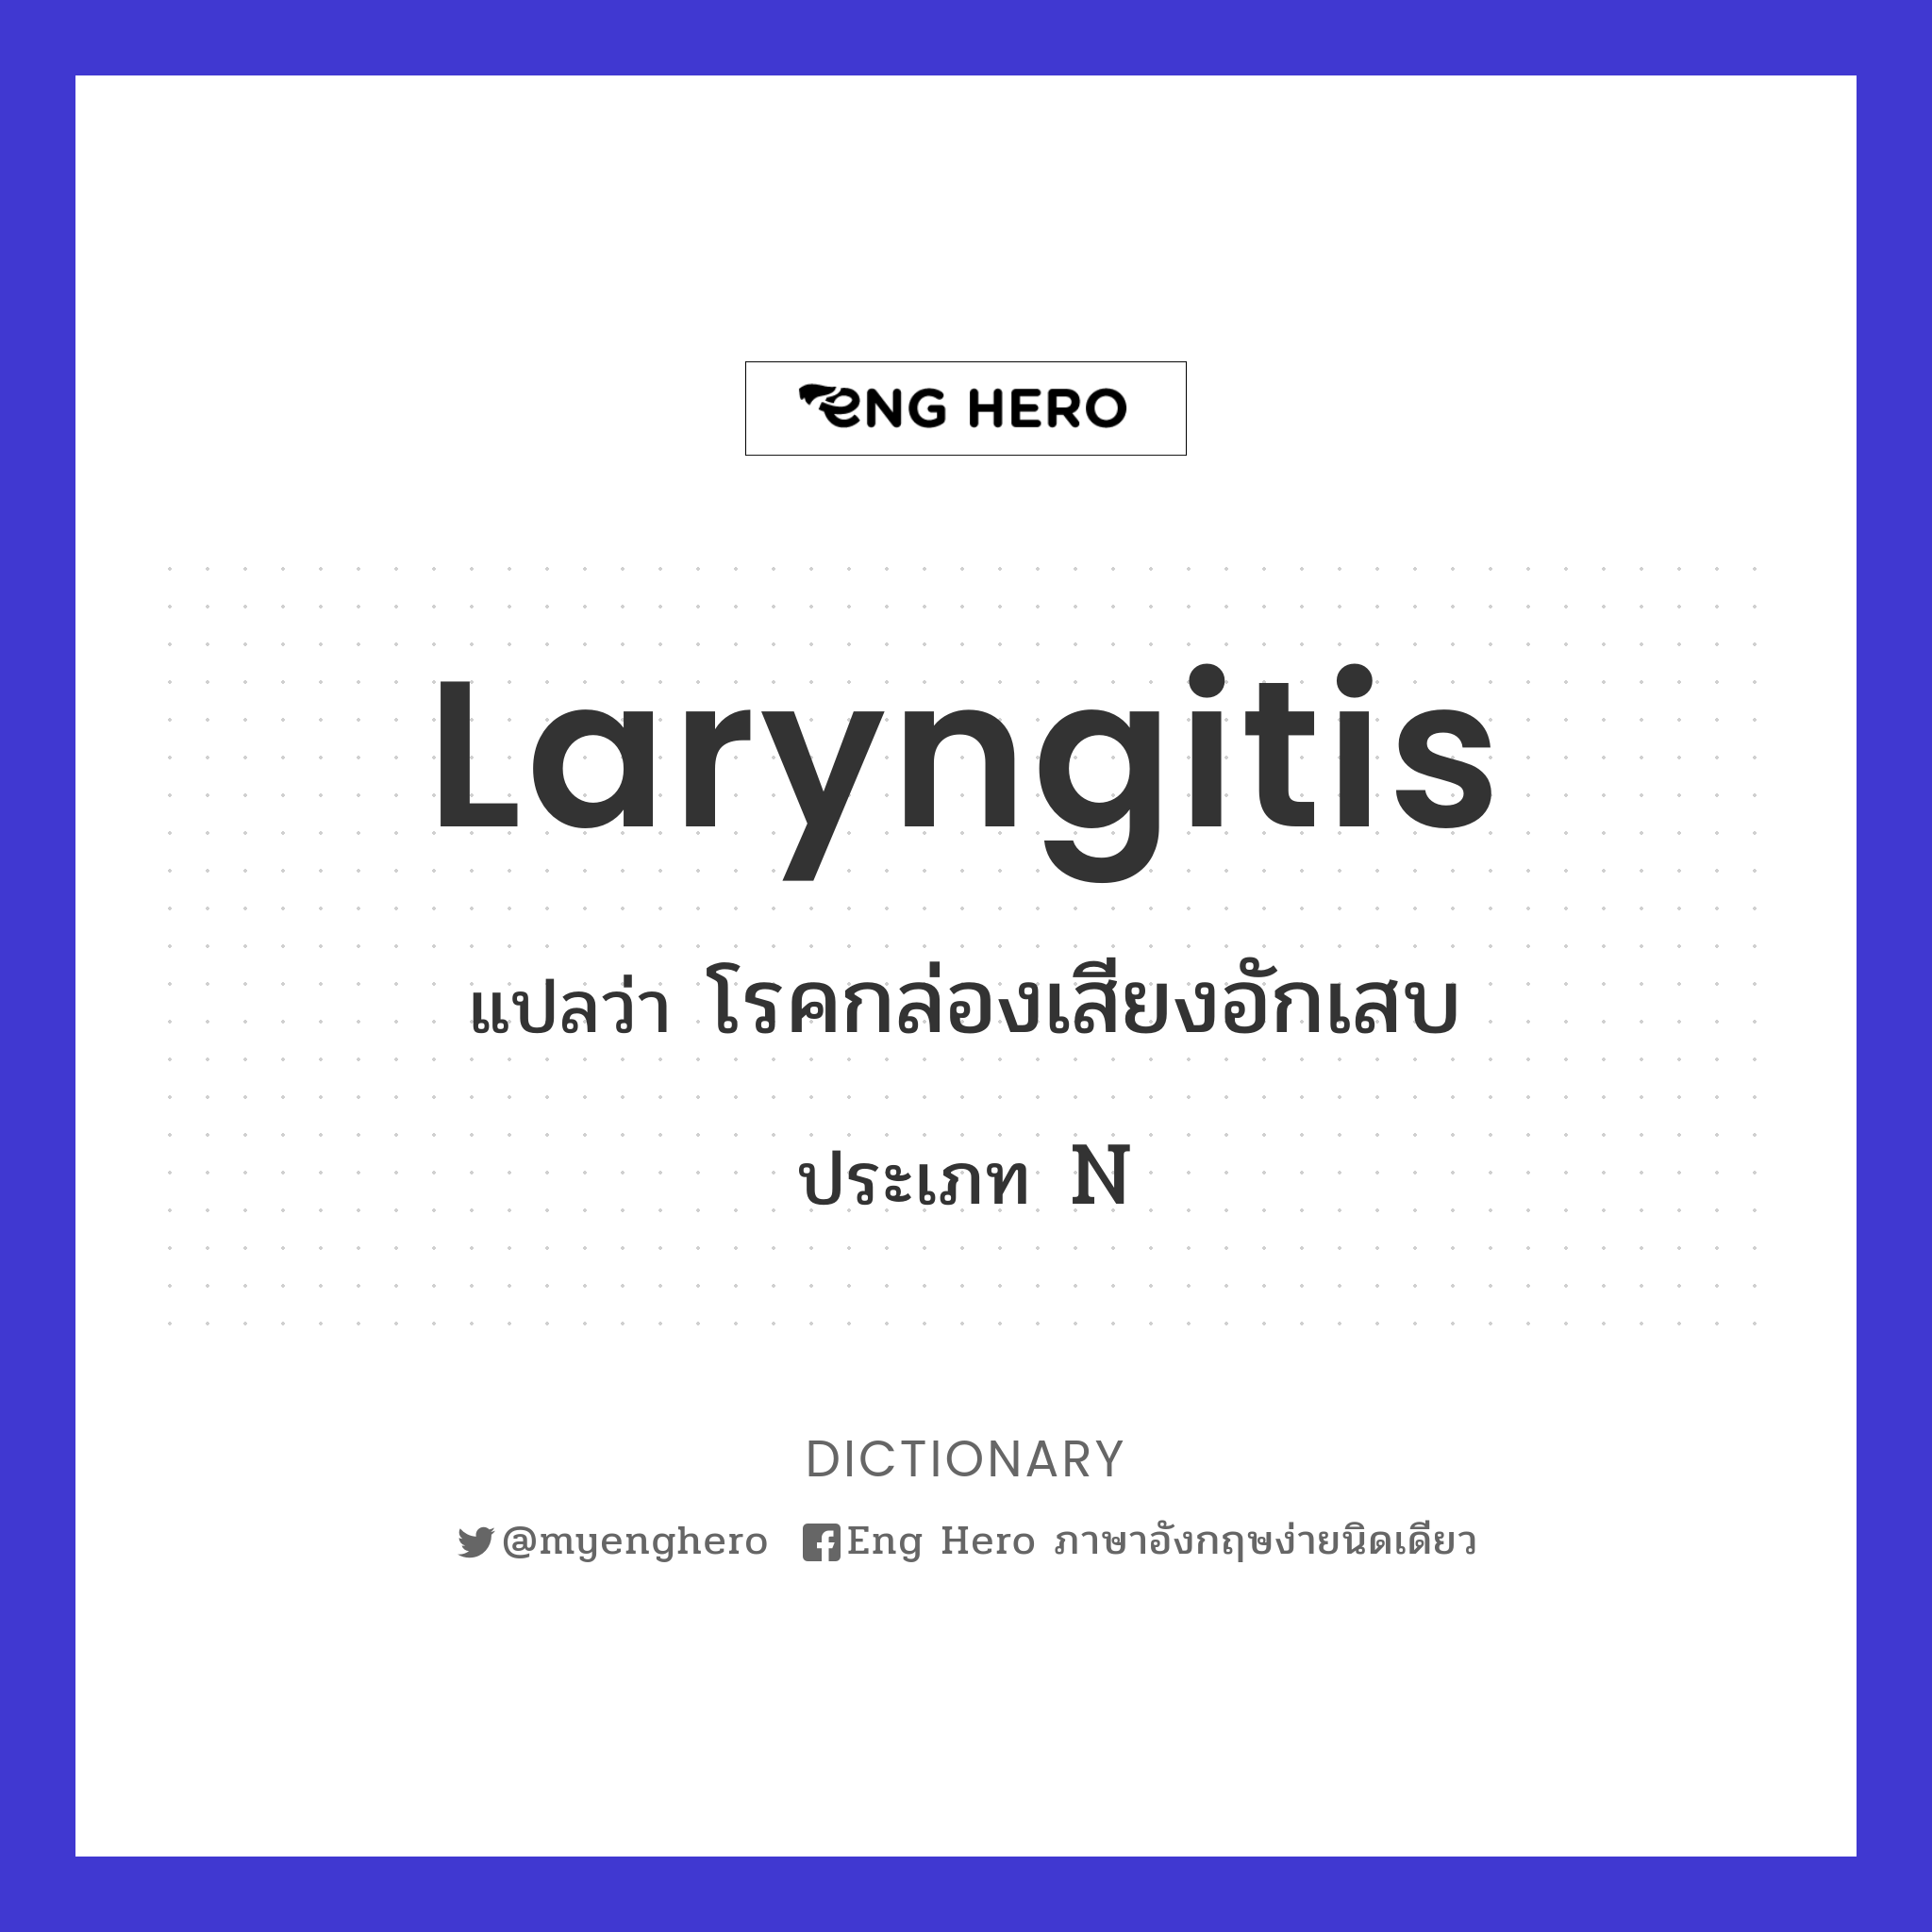 laryngitis